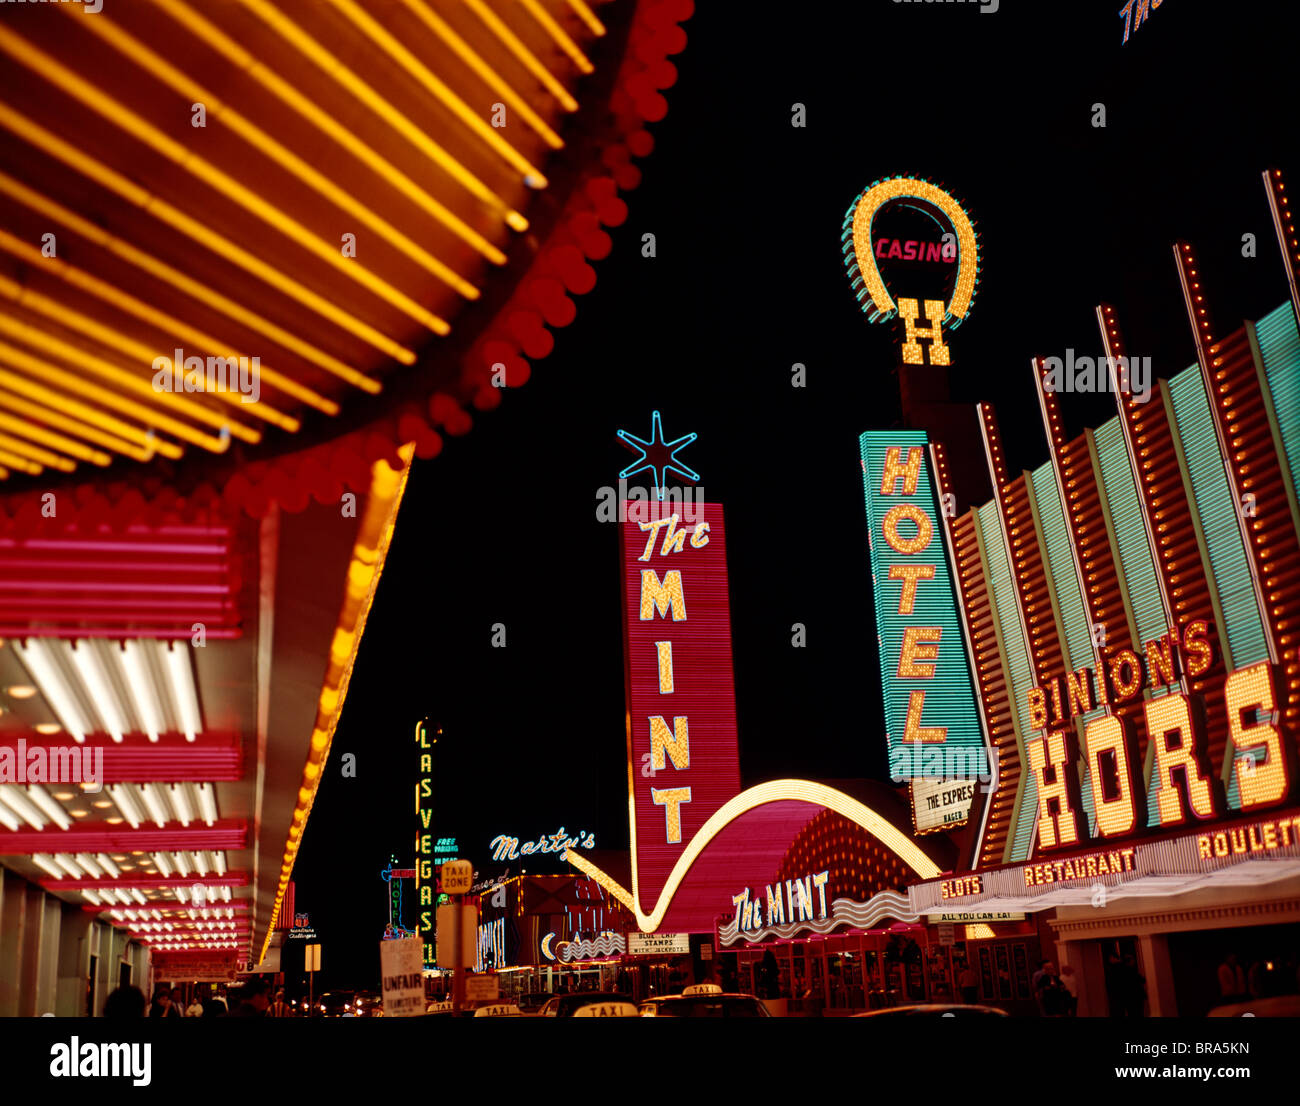 11x14 1960 Las Vegas Strip Casino PHOTO POSTER Map Mid Century Streets  Hotels